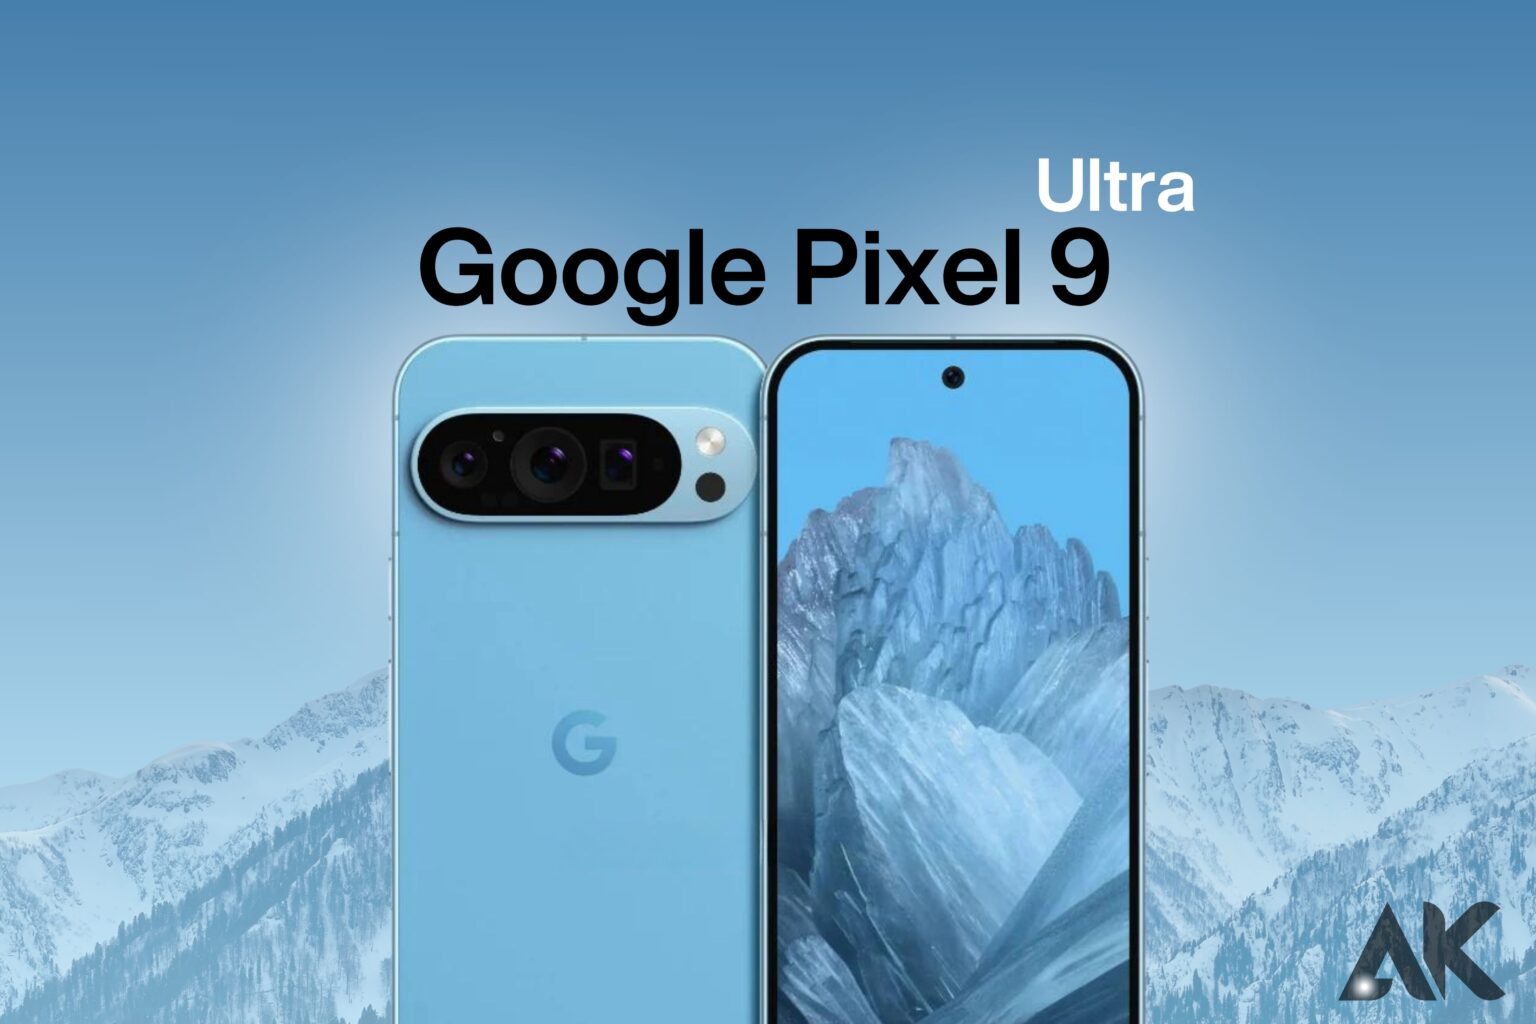 Google Pixel 9 Ultra